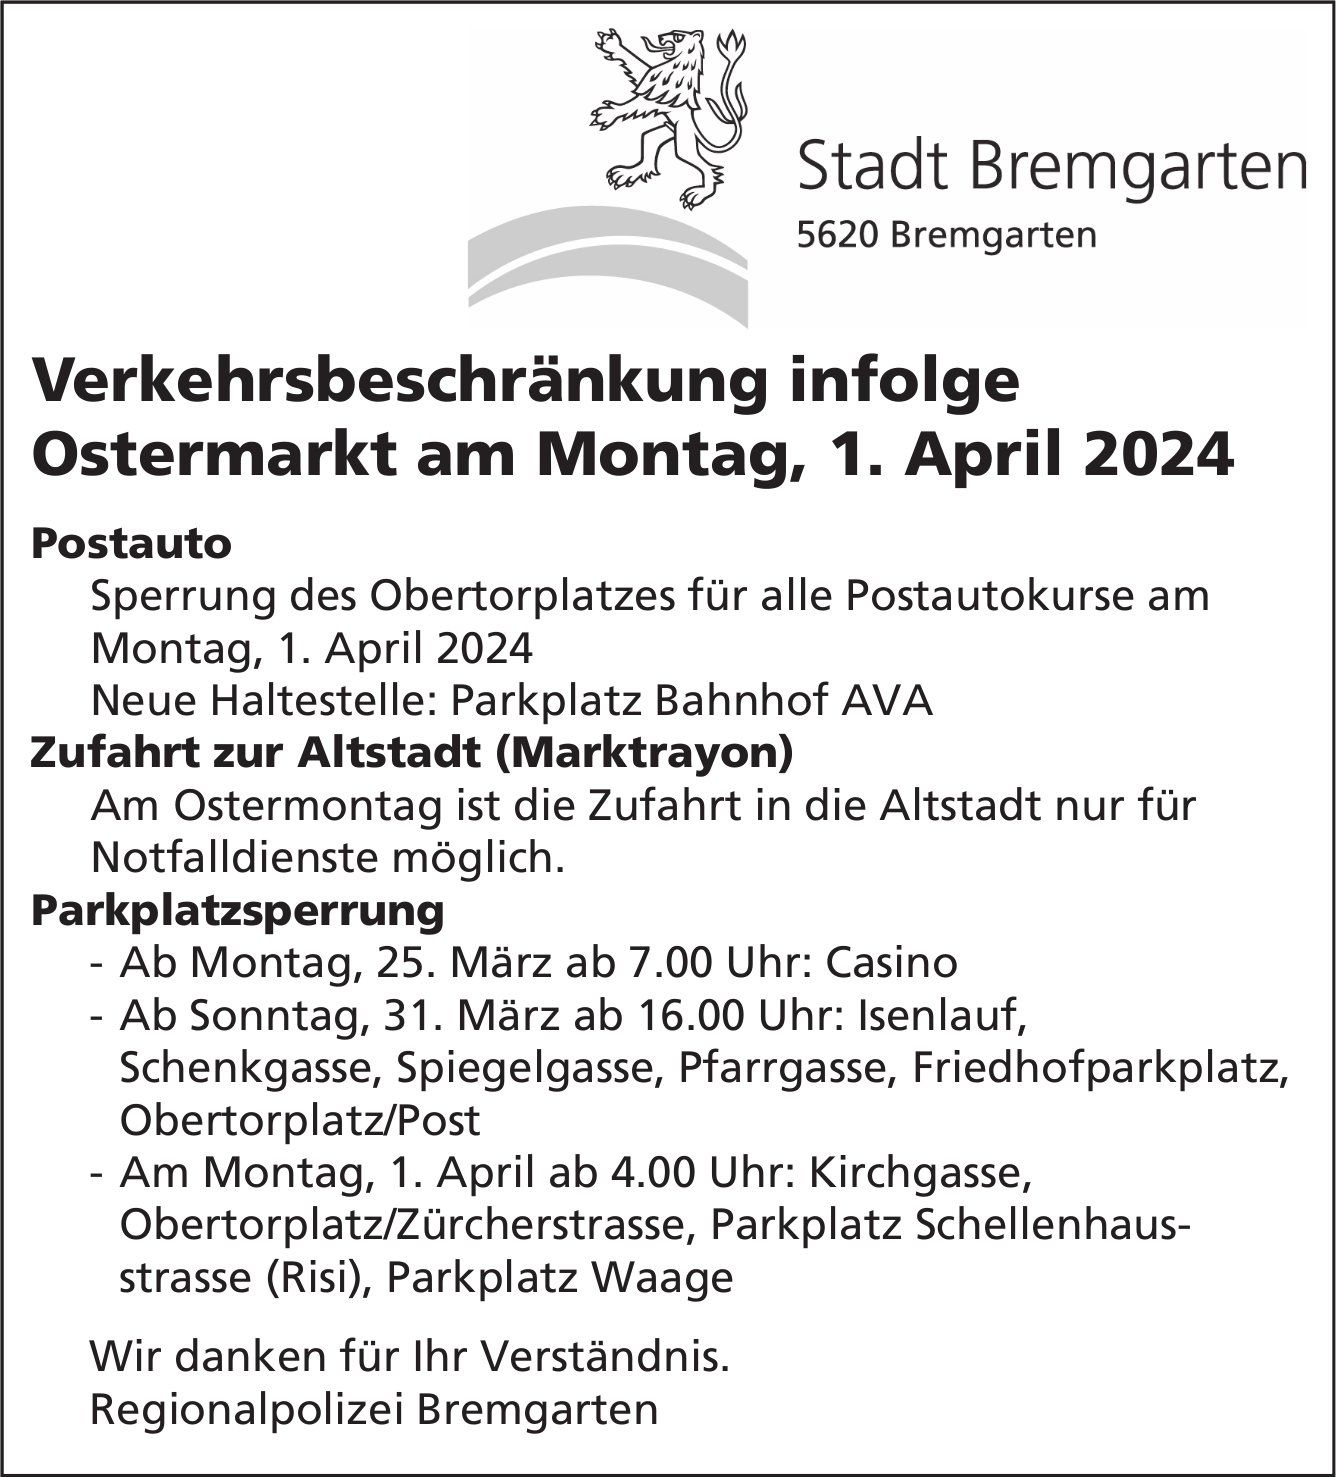 Bremgarten - Verkehrsbeschränkung infolge Ostermarkt